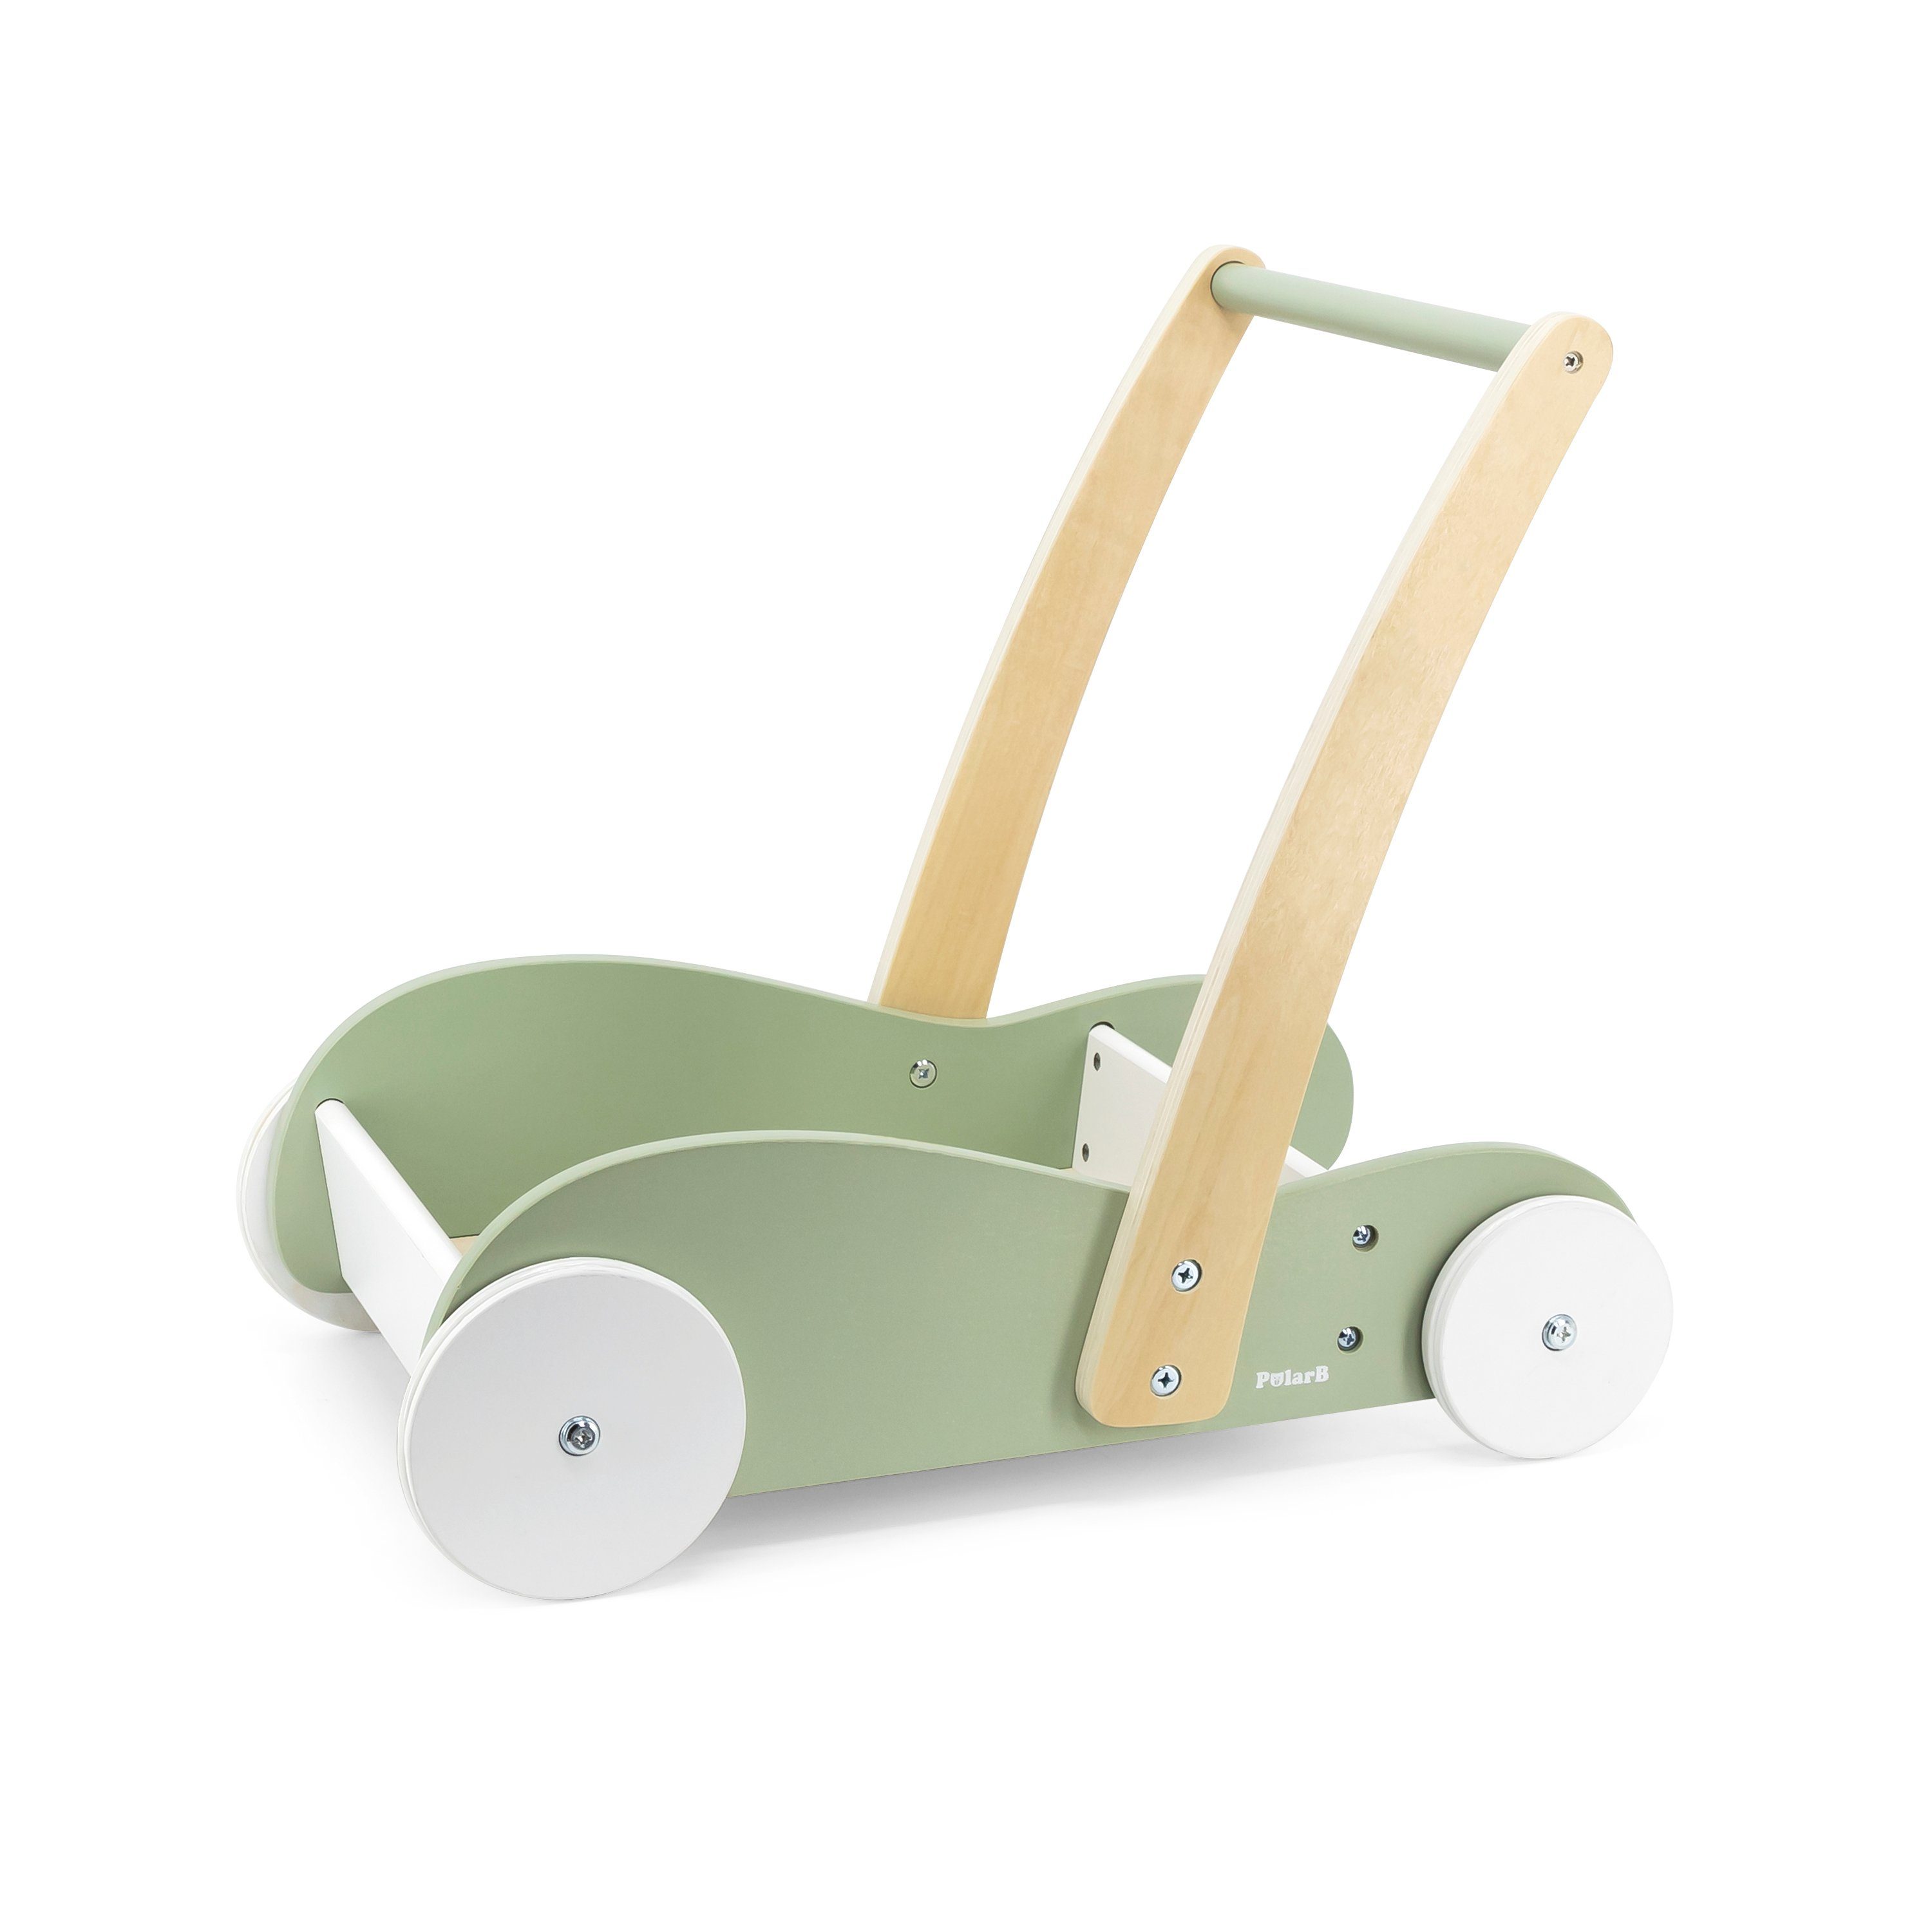 LeNoSa Lauflernwagen PolarB Holz Lauflernhilfe • Mint Walker Baby